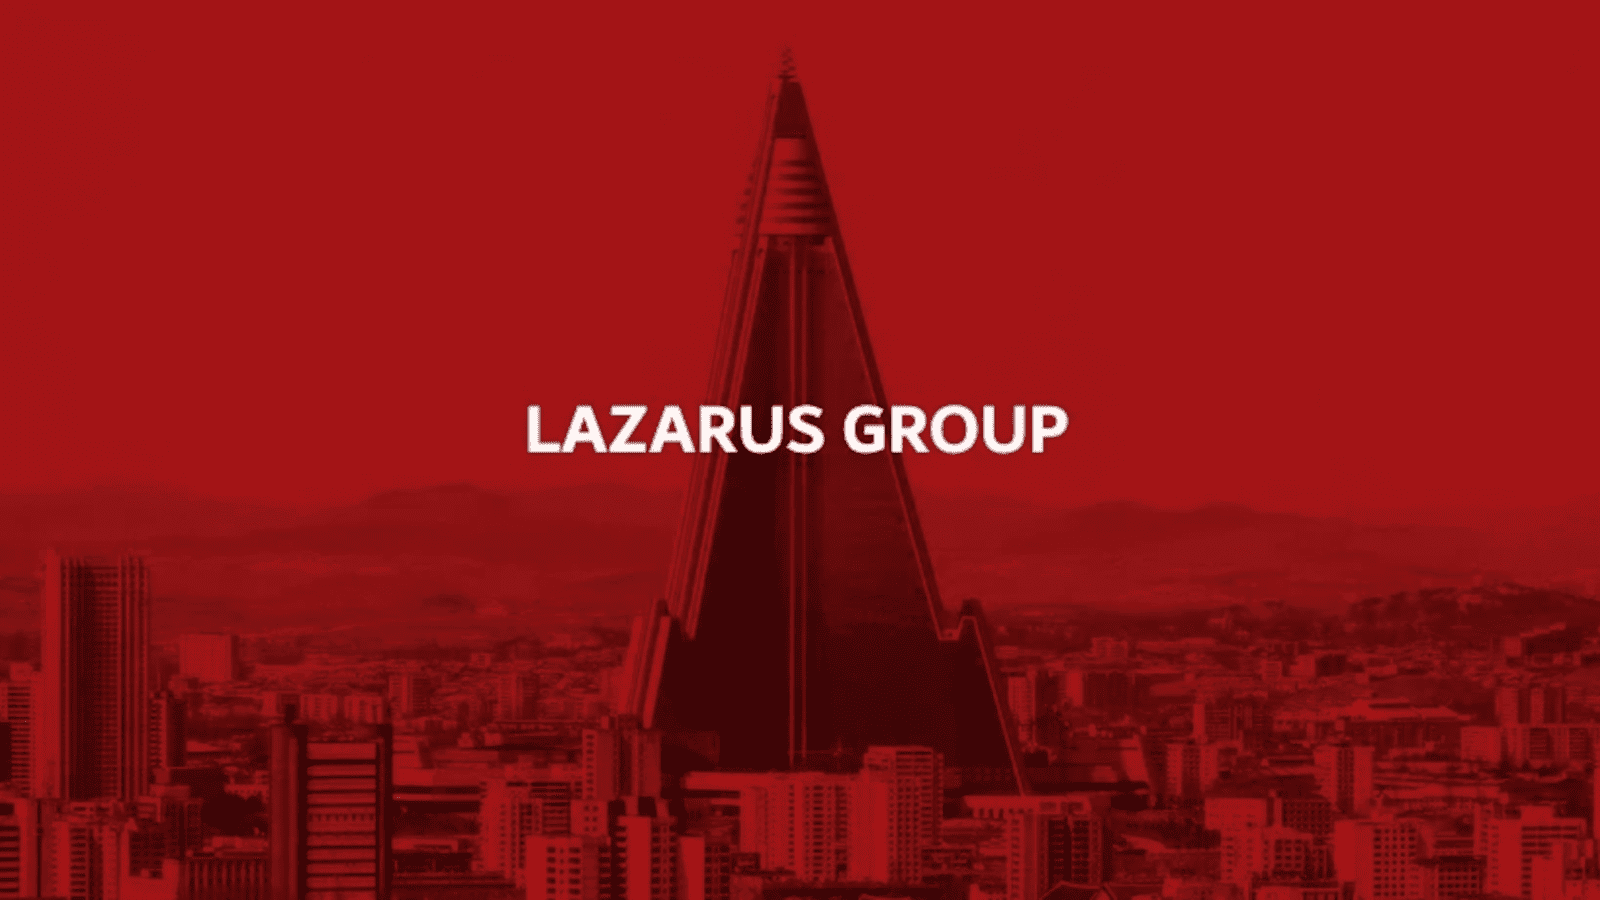 Lazarus hackers now push Linux malware via fake job offers